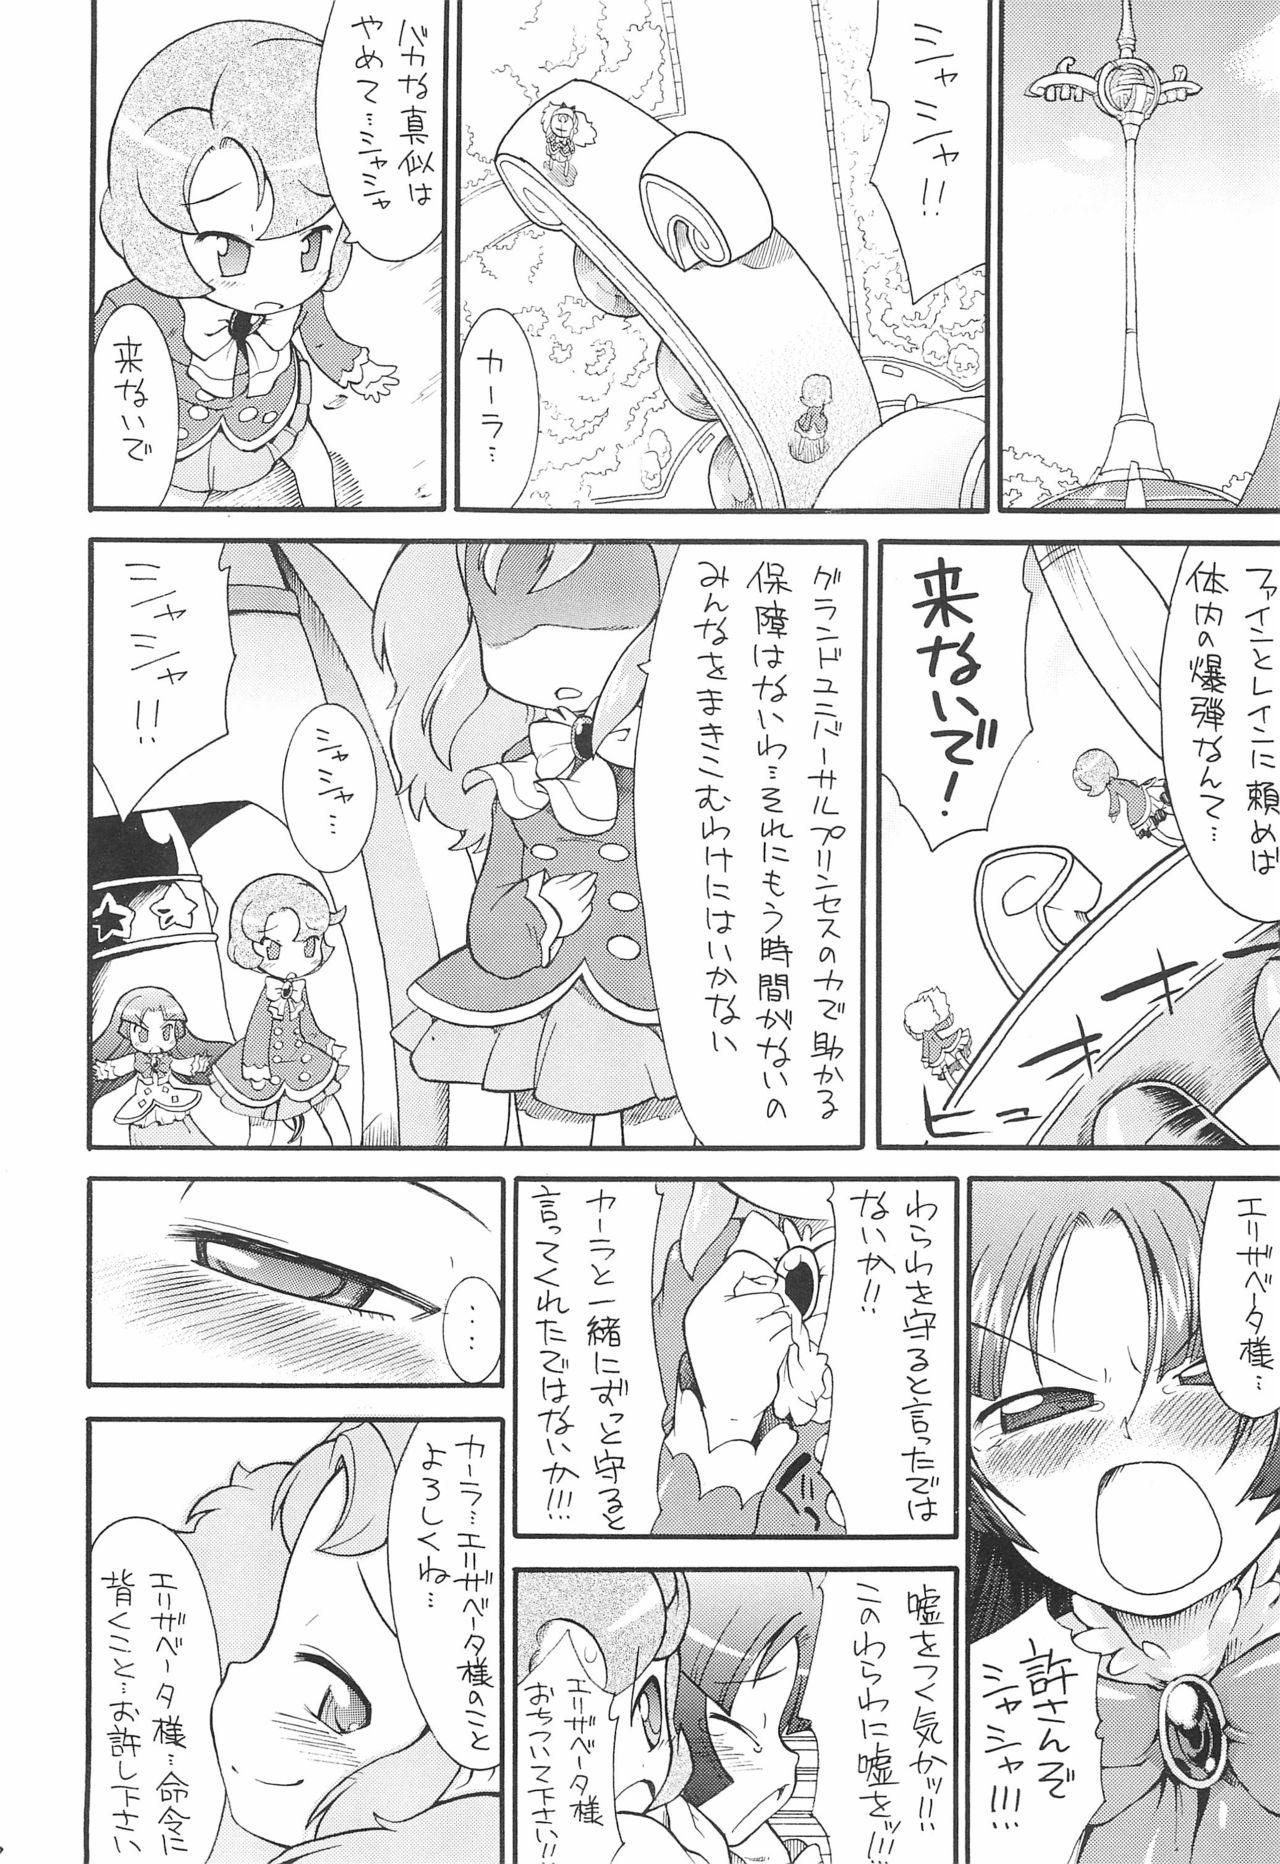 Exposed Kodomo ja Neenda Princess nanda! 6 - Fushigiboshi no futagohime | twin princesses of the wonder planet Porno 18 - Page 6